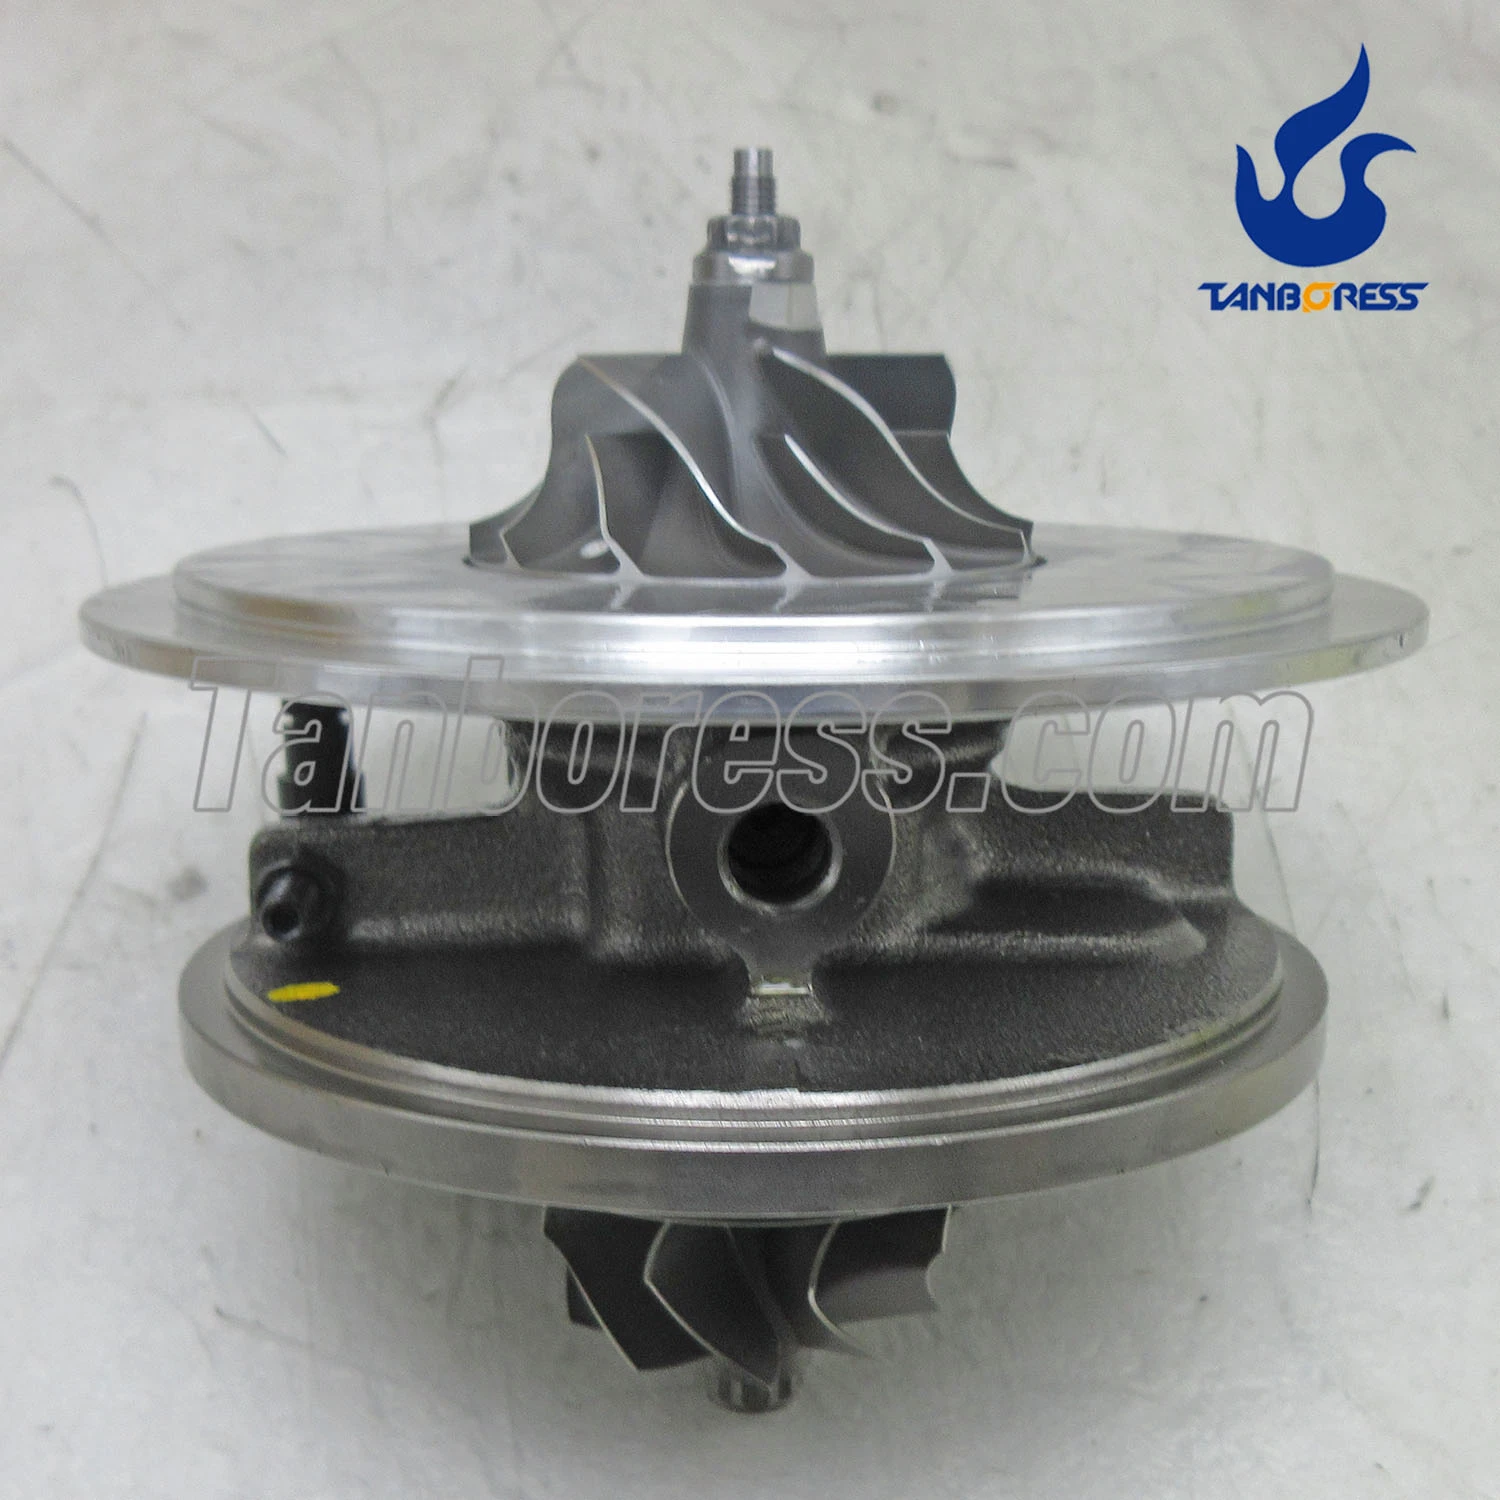 Turbo cartridge for Nissan Navara 2.5 DI 144  HP GT2056V 734868-0001 734868-1 turbocharger